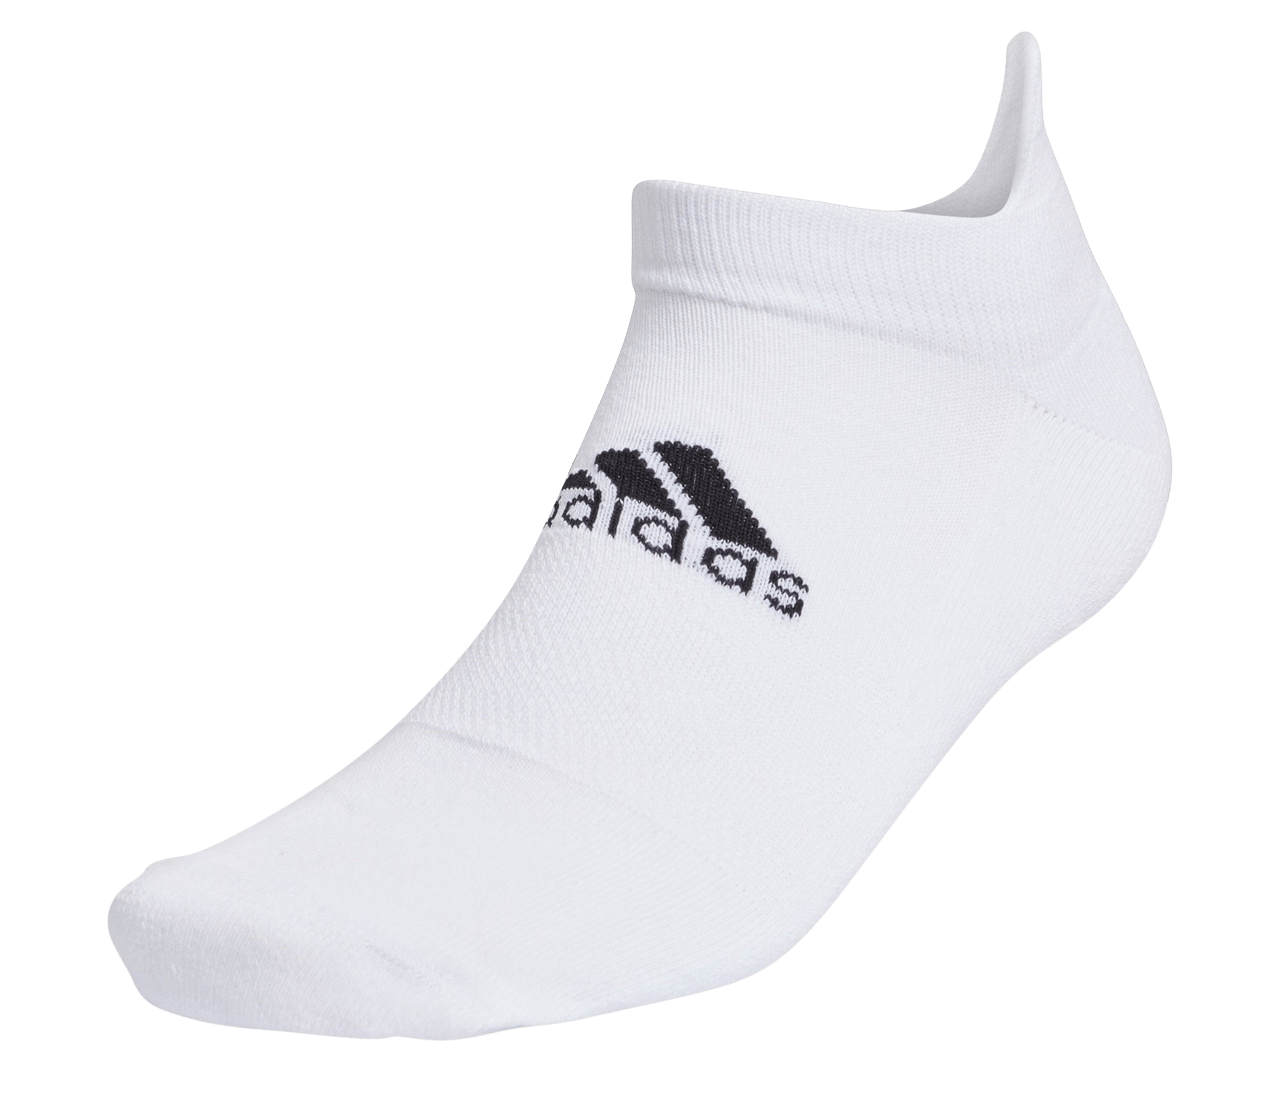 Adidas Basic Ankle Socks